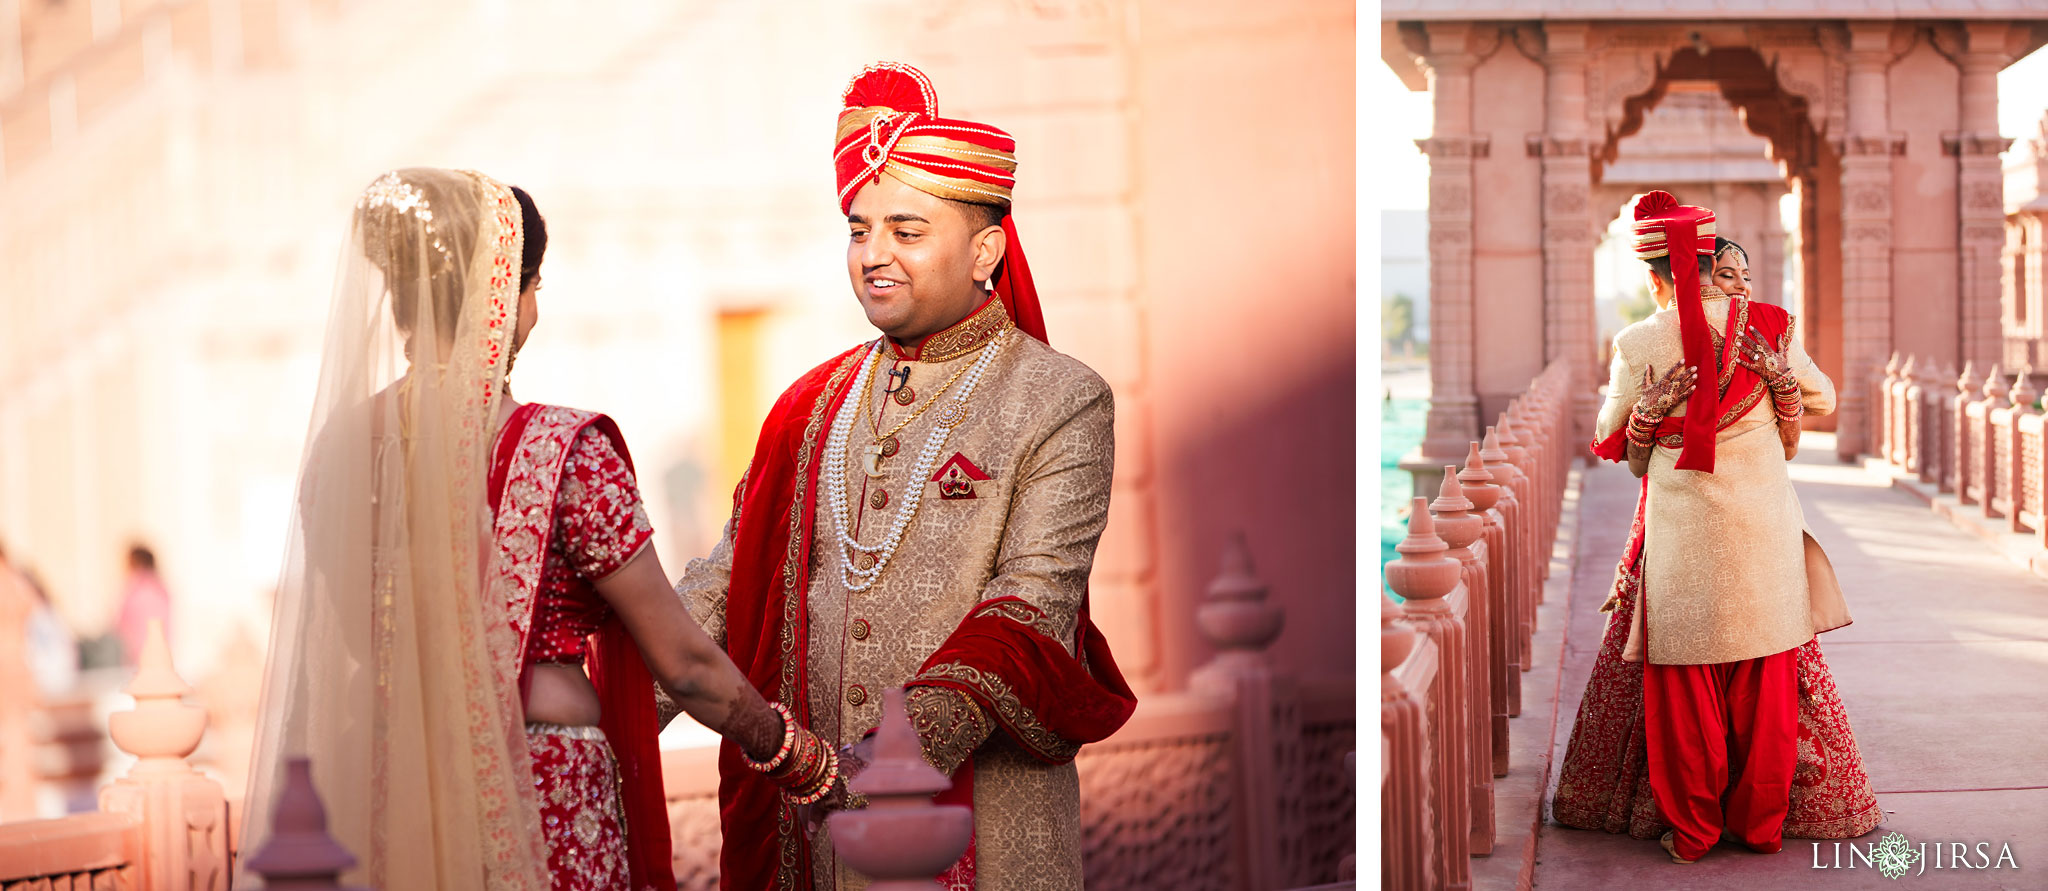 072 BAPS Swaminarayan Sanstha Chino Hills Indian Wedding Photography